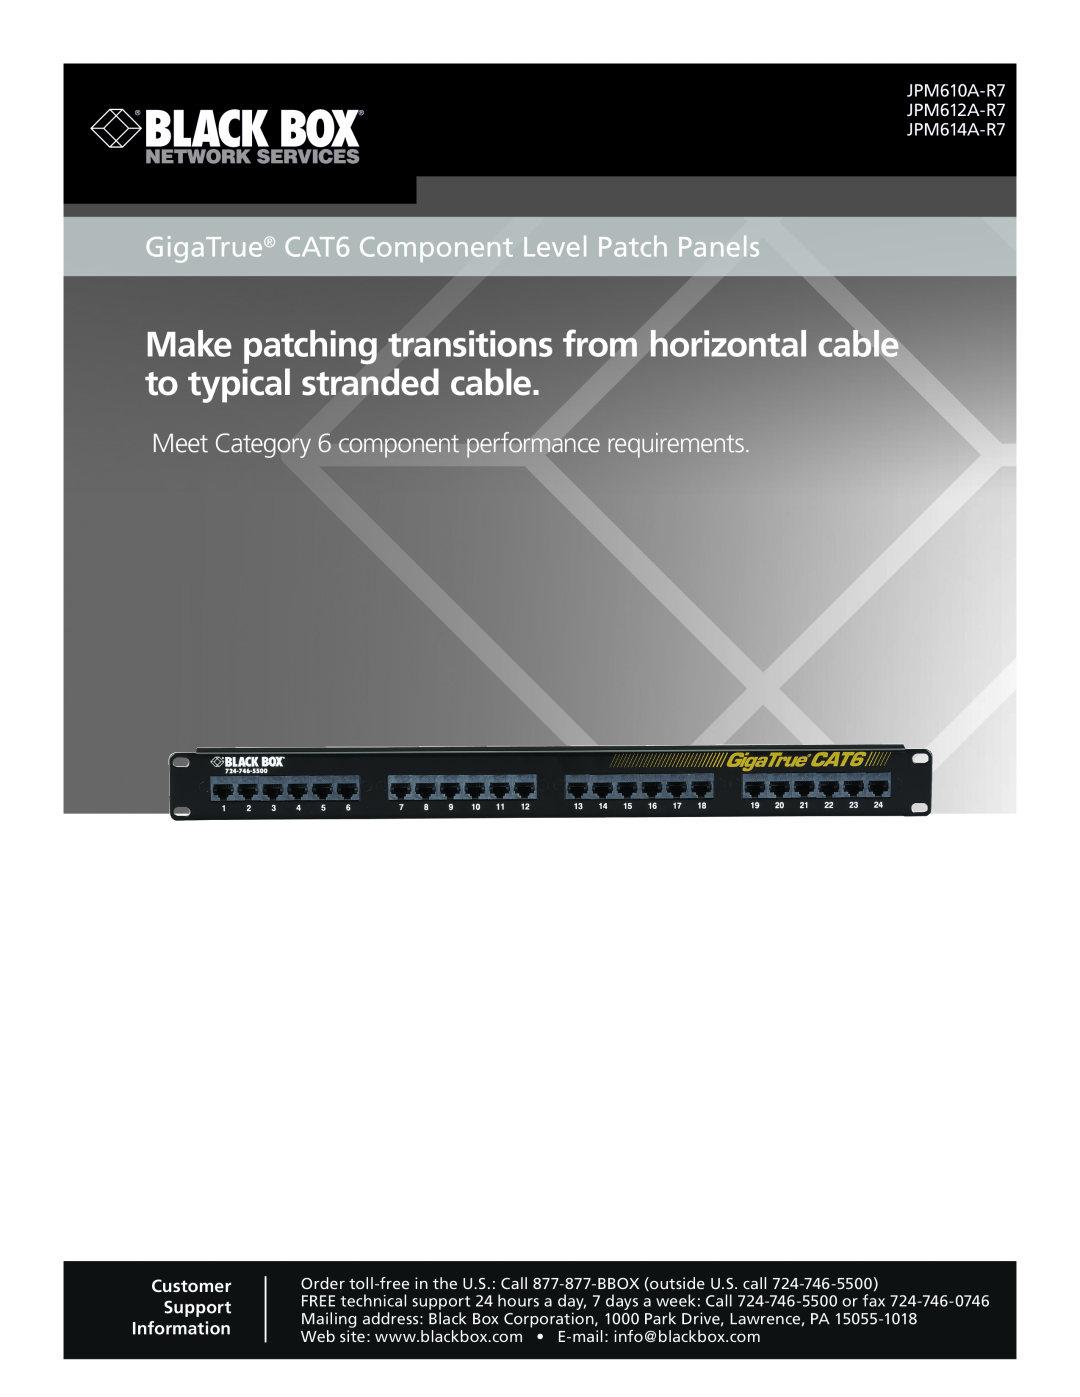 Black Box manual GigaTrue CAT6 Component Level Patch Panels, JPM610A-R7 JPM612A-R7 JPM614A-R7 